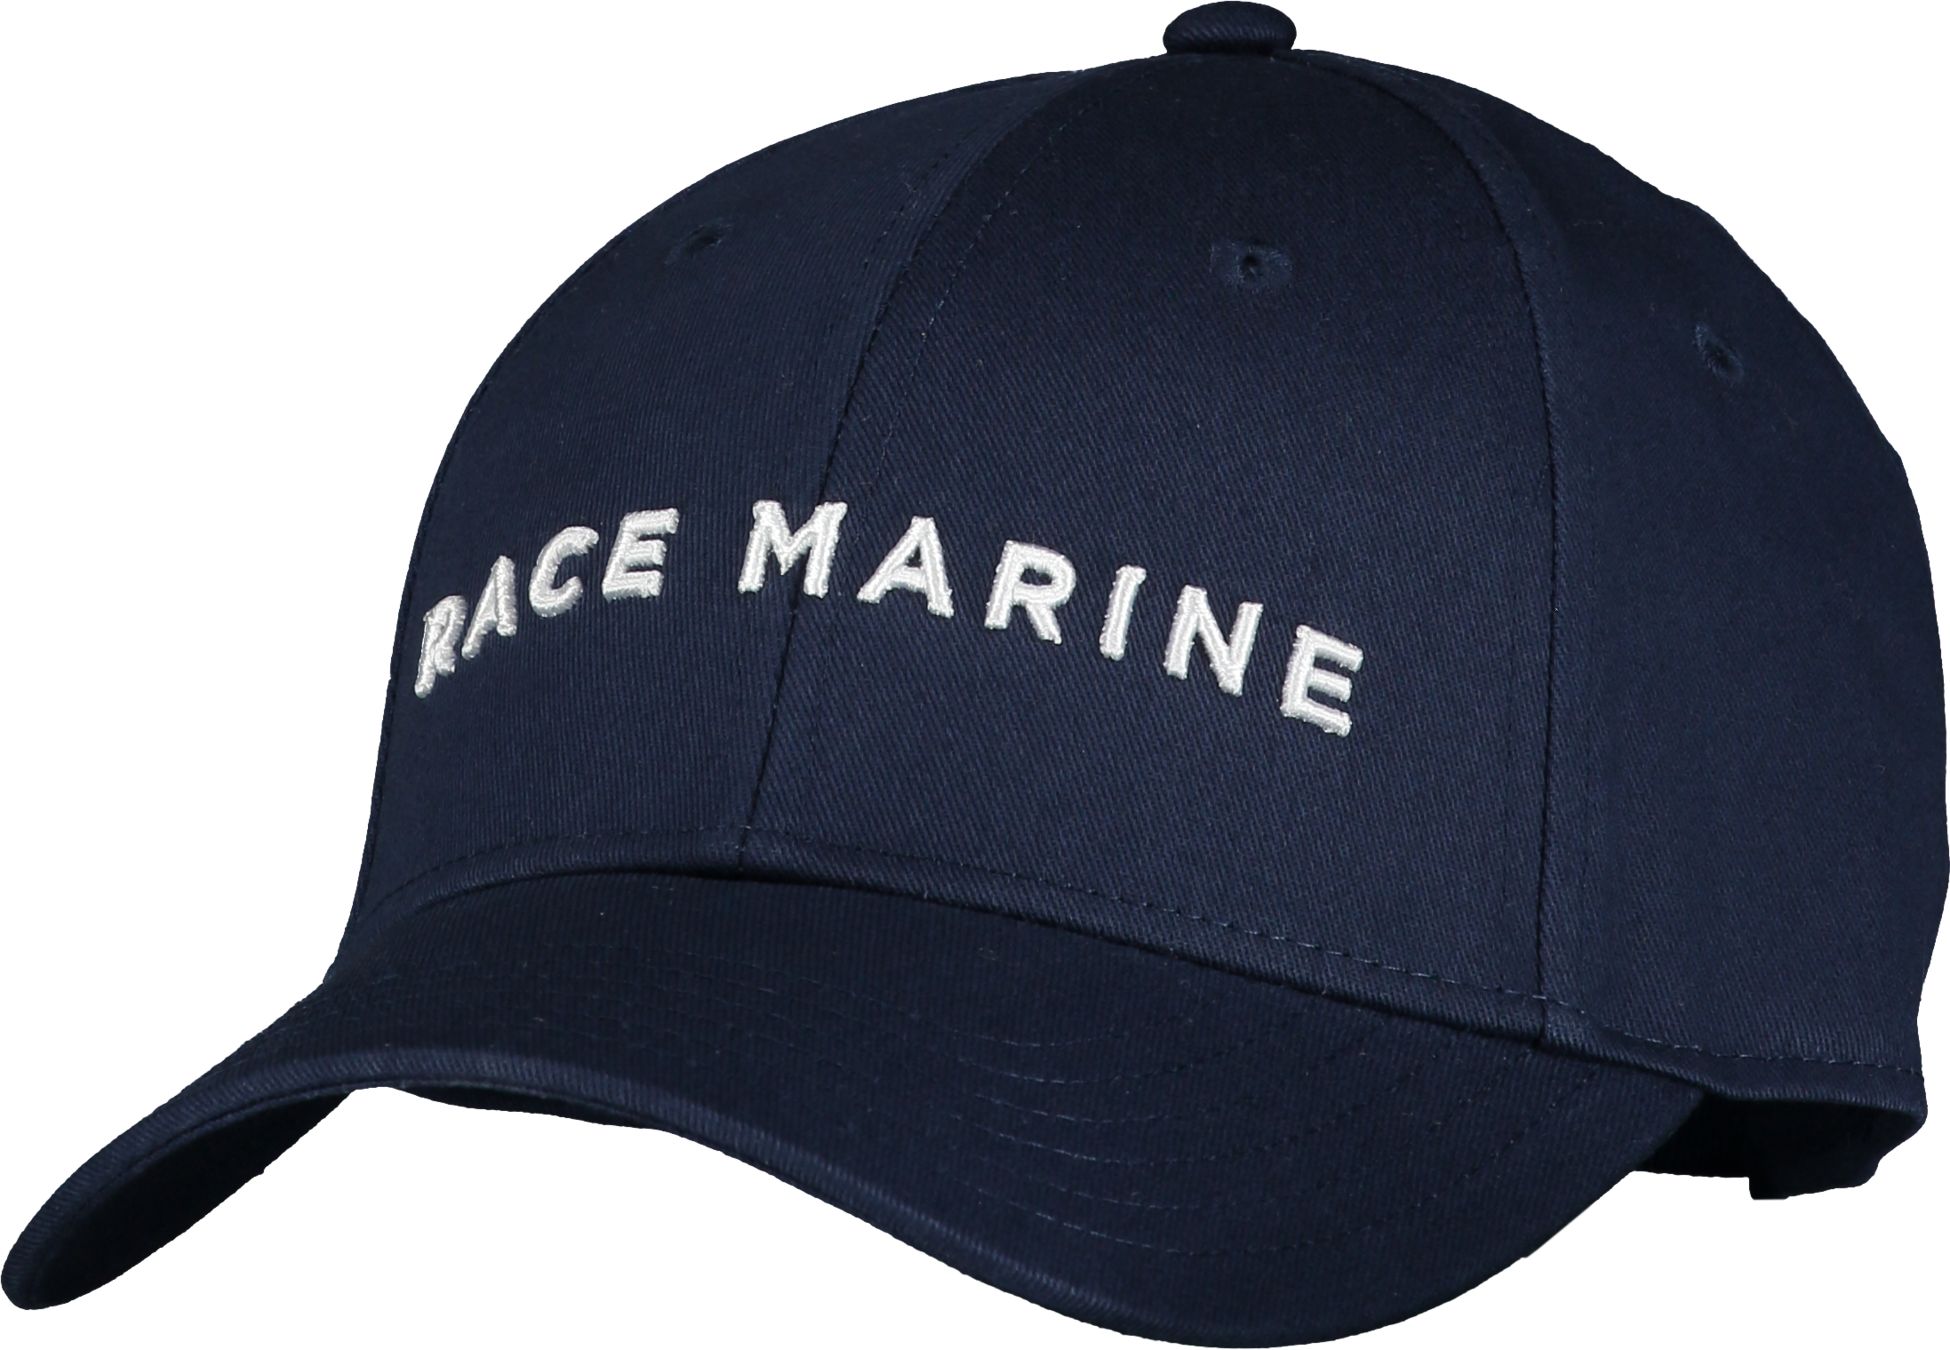 RACE MARINE, U SEA CAP